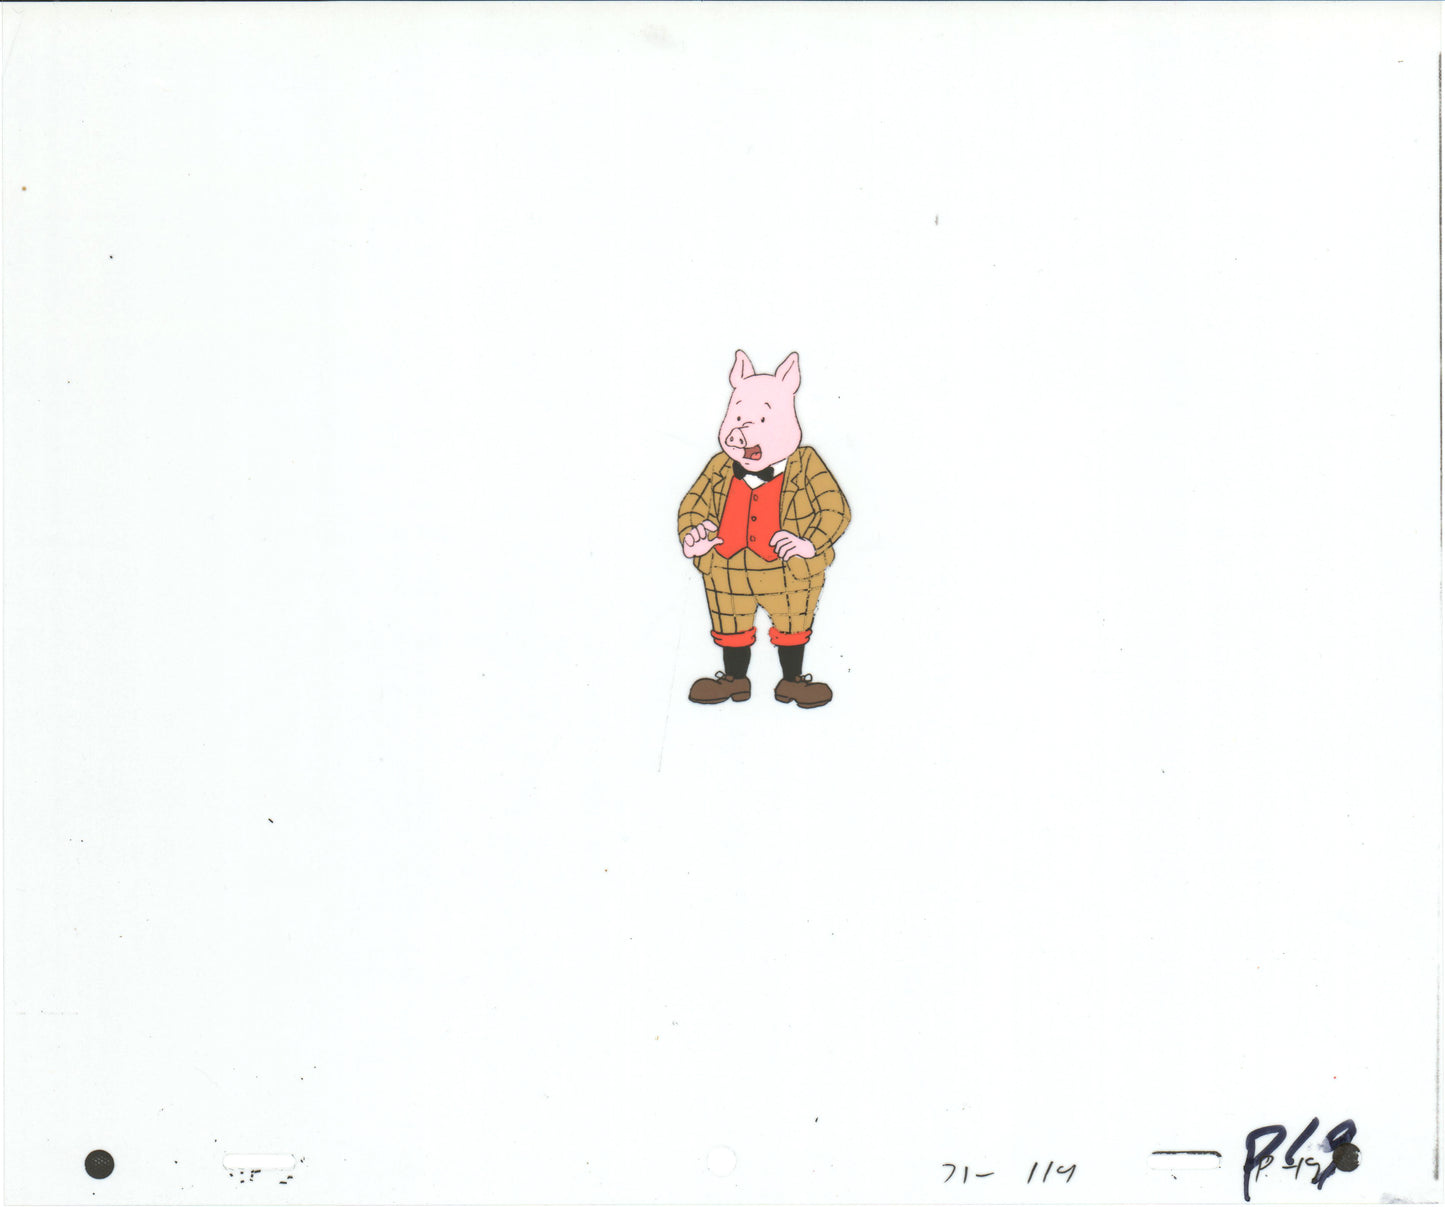 RUPERT Bear Podgy Pig Original Production Animation Cel from the Cartoon by Nelvana Tourtel Animation 1990s 8-317